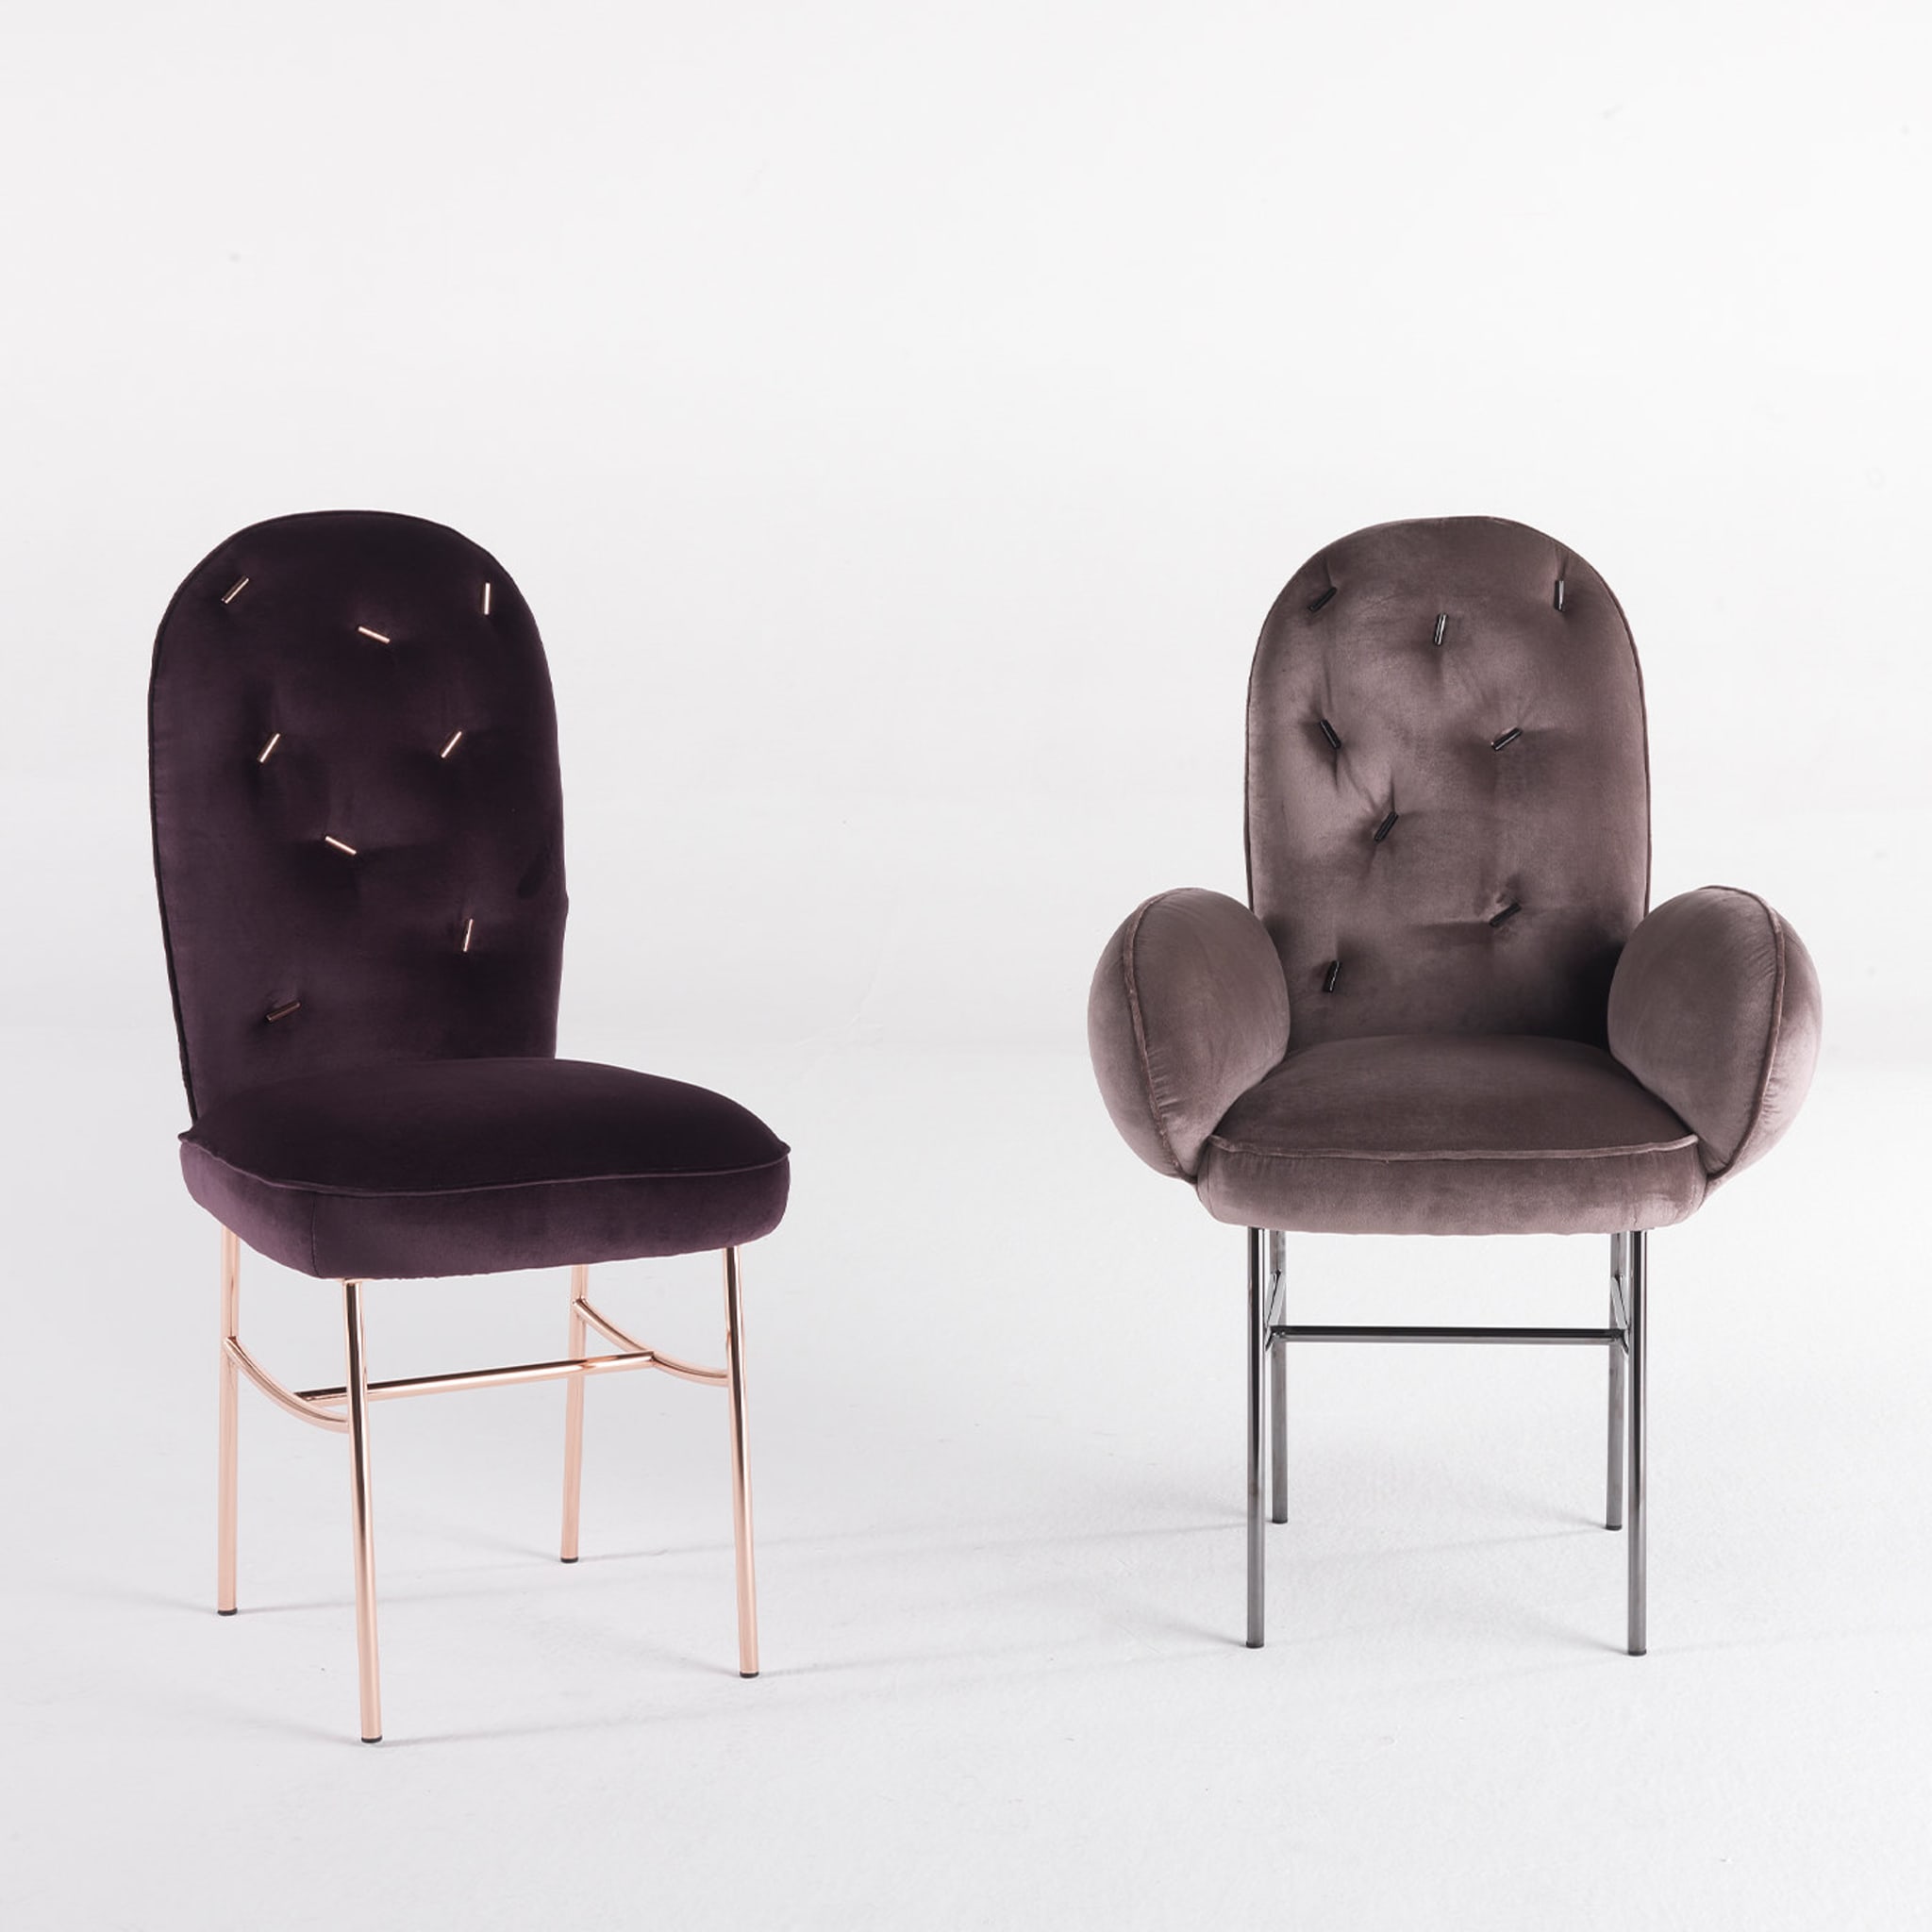 Ttemic Dark Purple Chair by Matteo Cibic - Alternative view 1